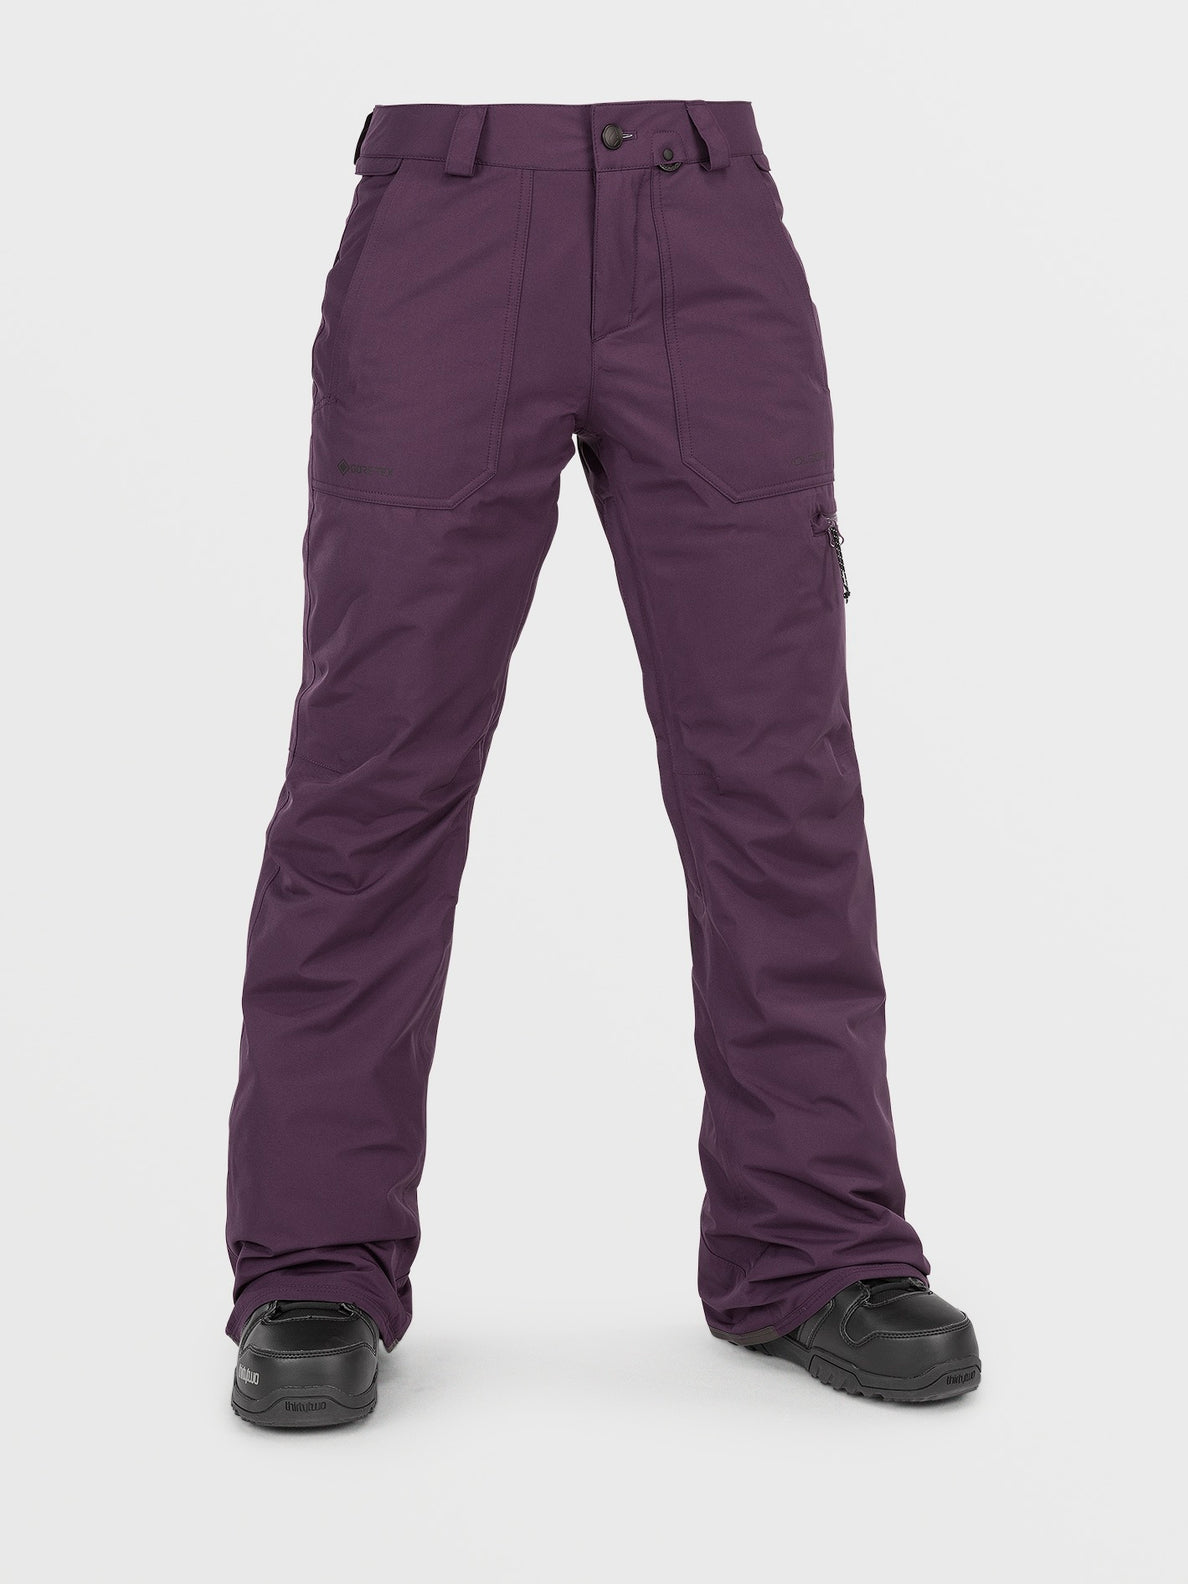 TERNUA-DARKSTONE PANT W -BLACKBERRY WINE - Hiking trousers